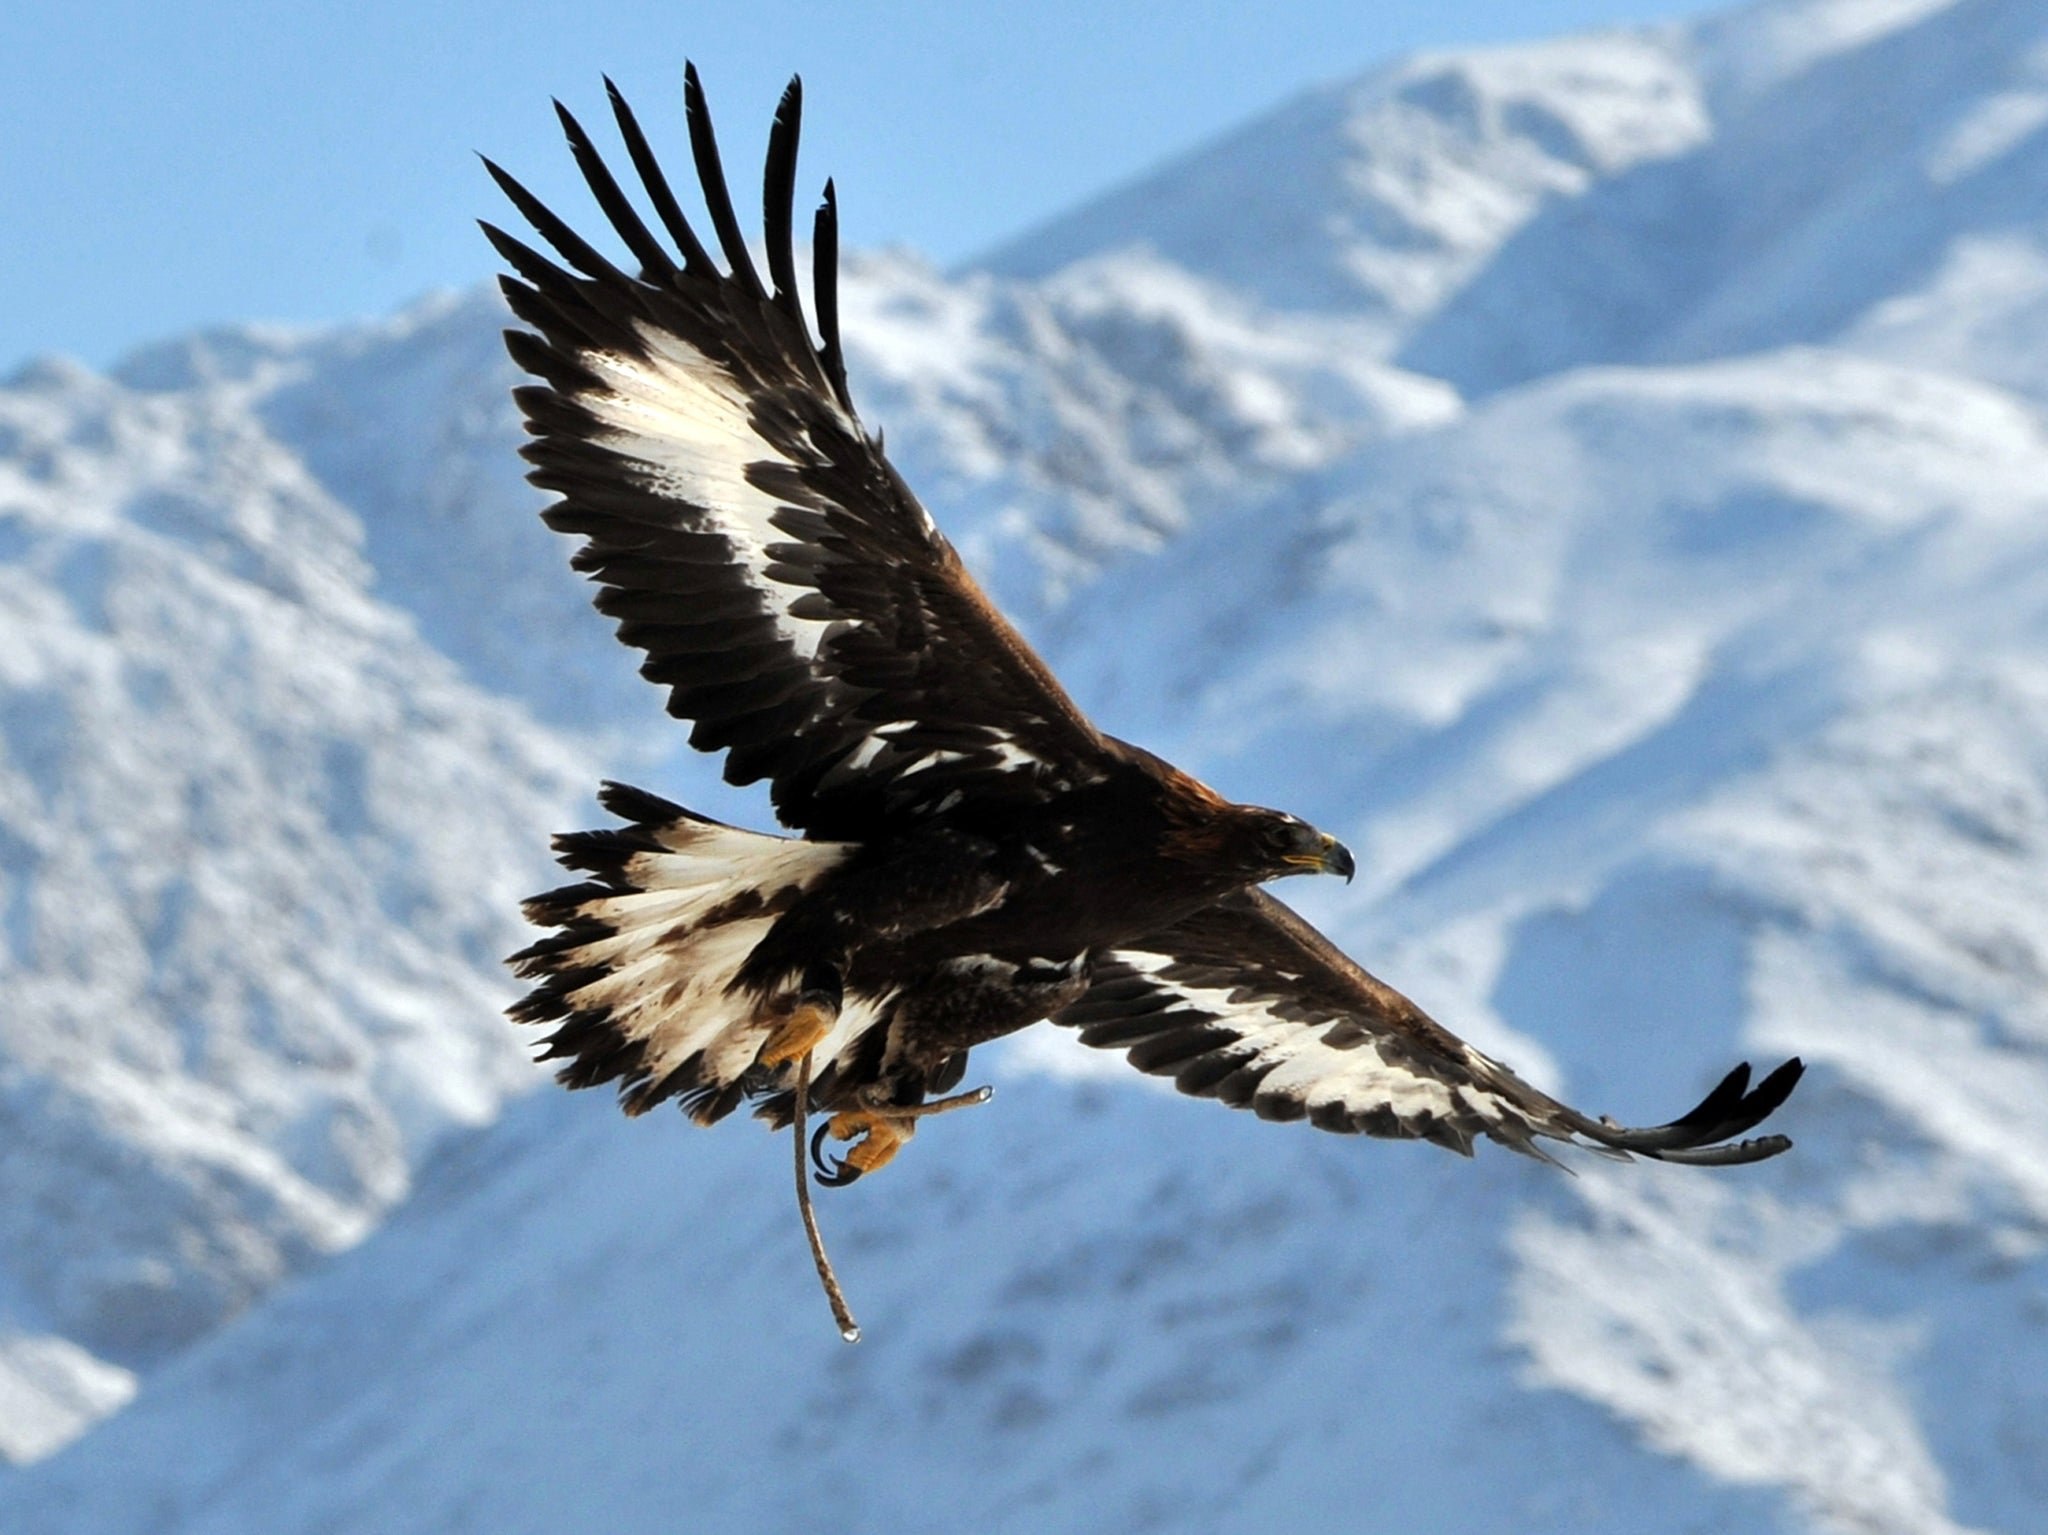 орел в горах дагестана